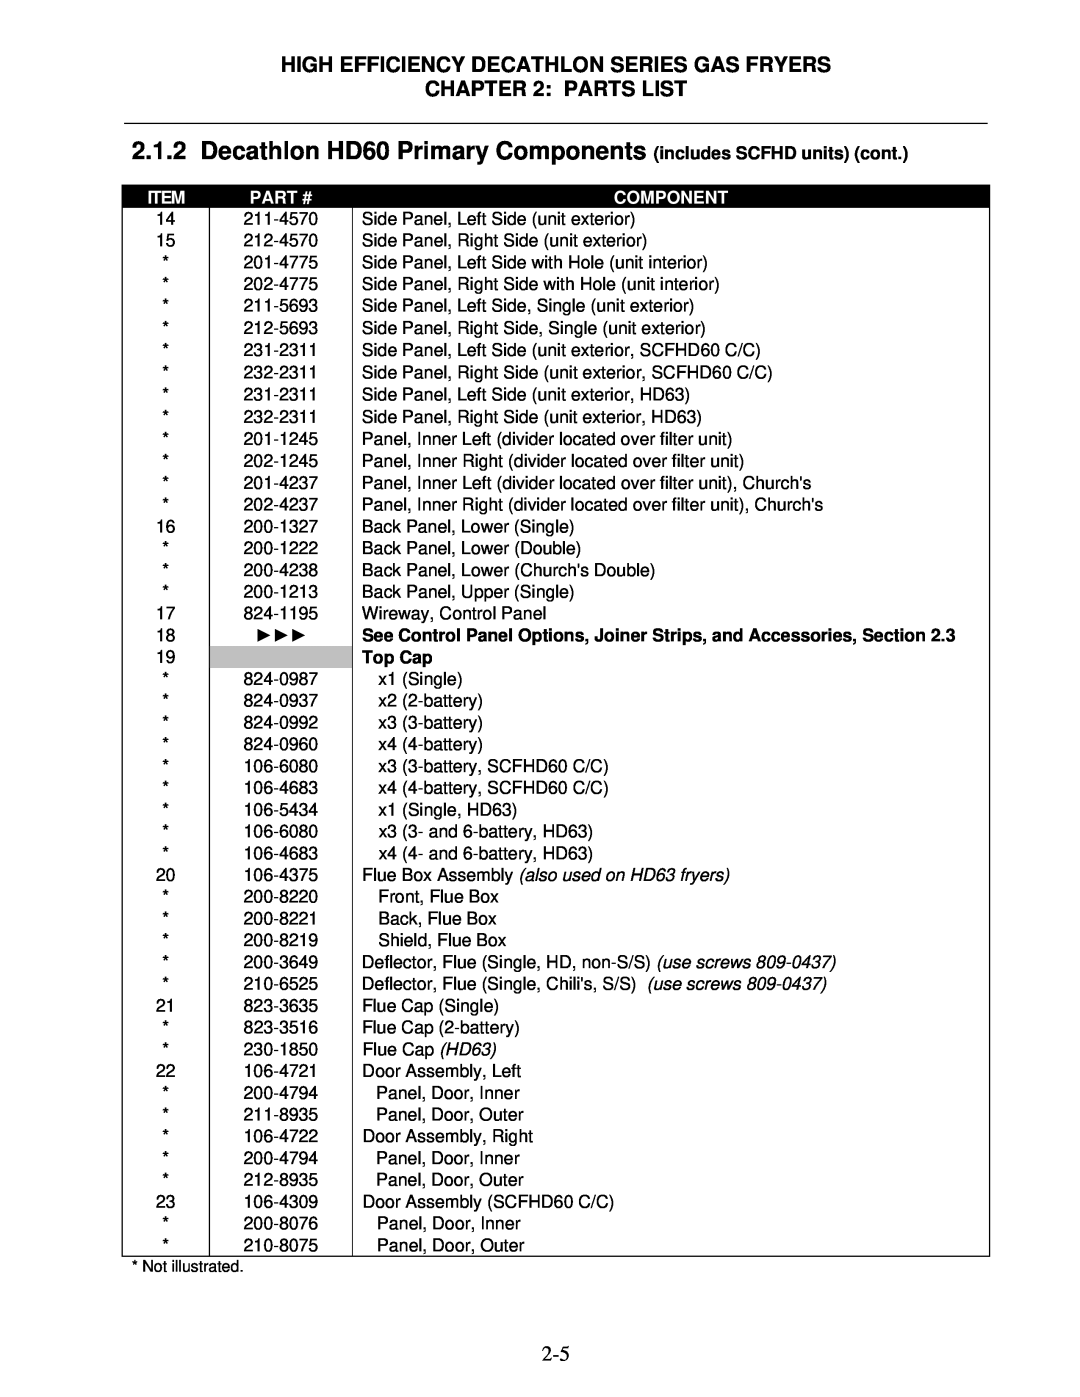 Frymaster FPHD manual High Efficiency Decathlon Series Gas Fryers, Parts List, Item, Part #, Component 